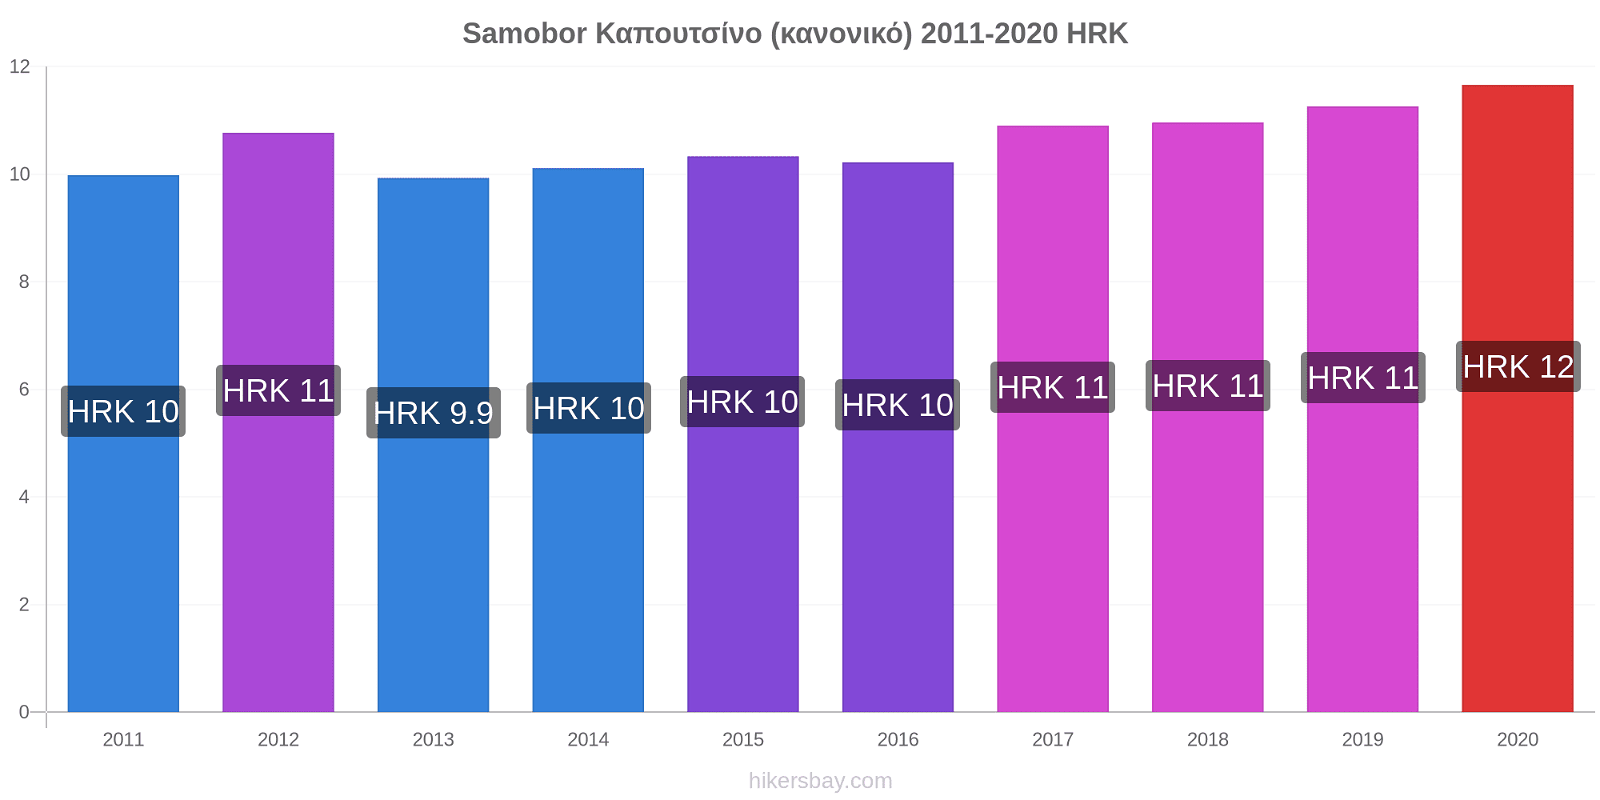 Samobor αλλαγές τιμών Καπουτσίνο (κανονικό) hikersbay.com